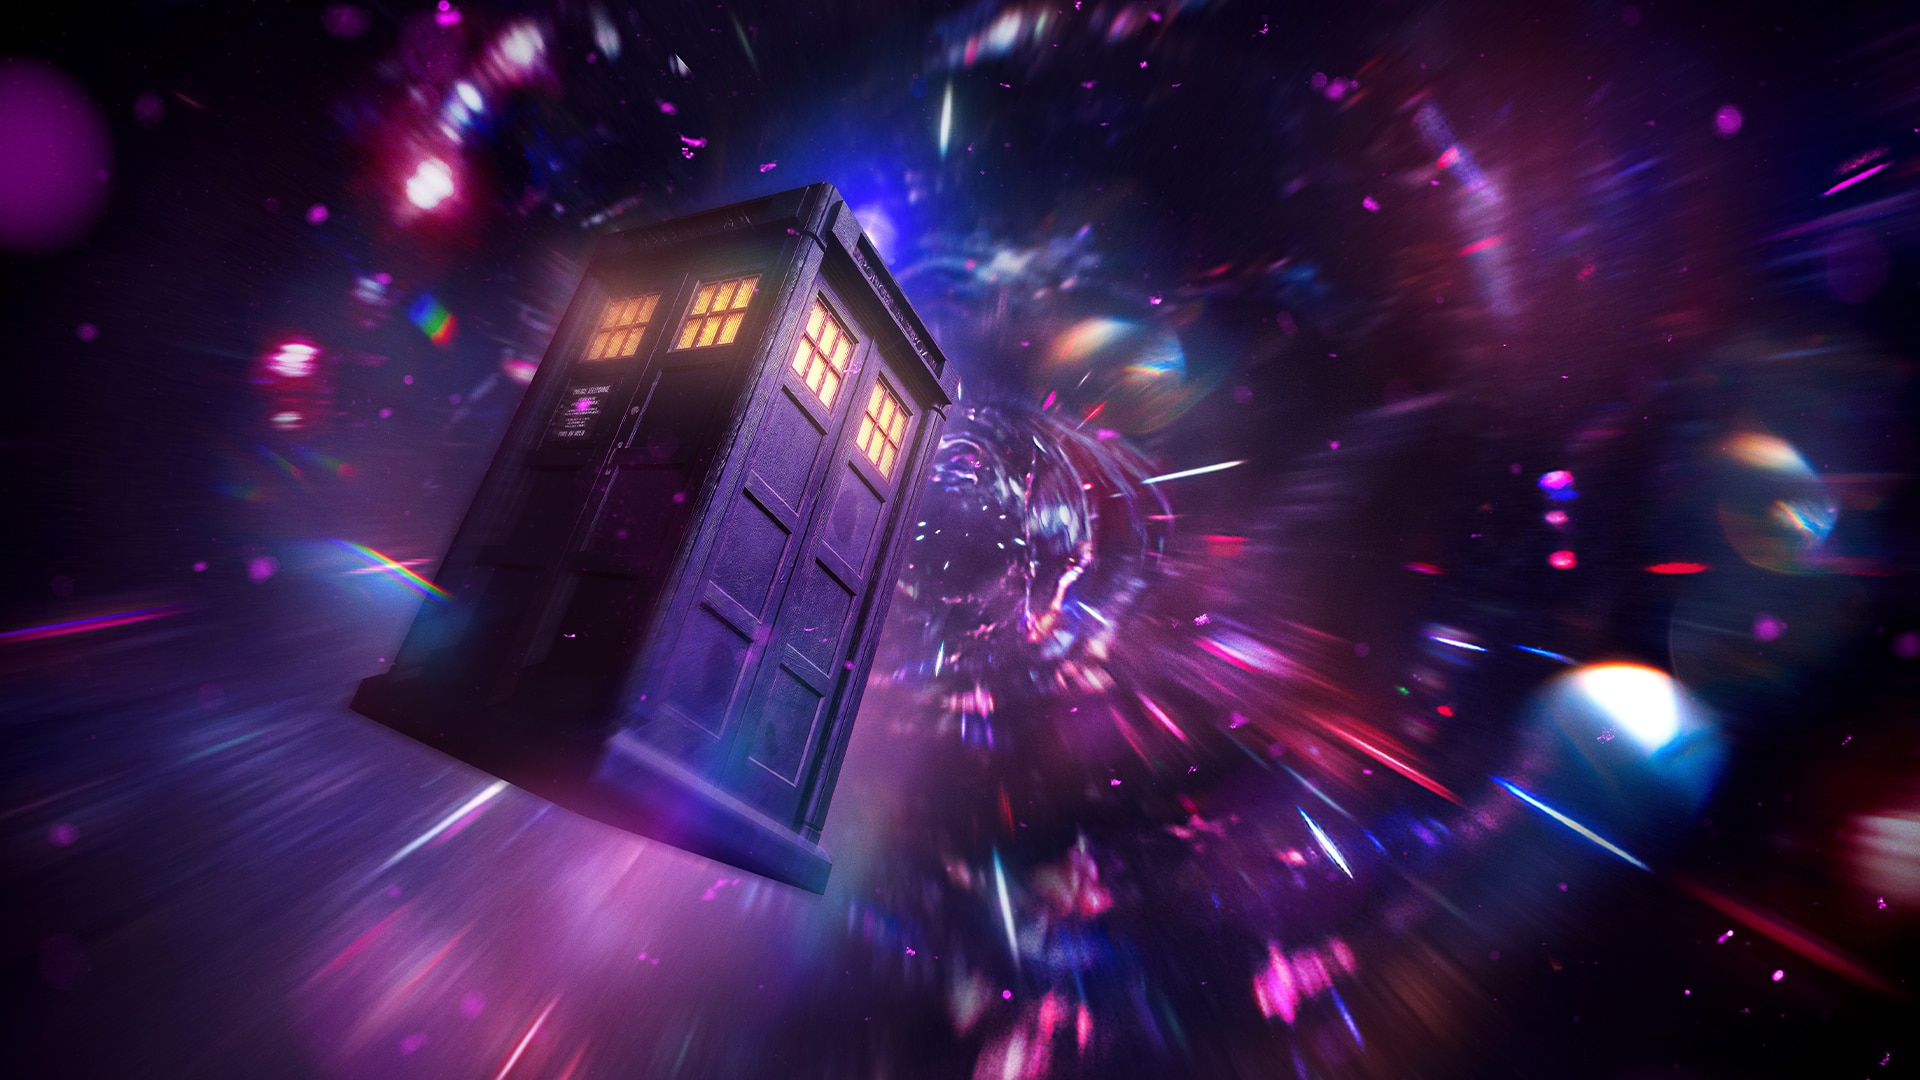 The TARDIS, Doctor Who